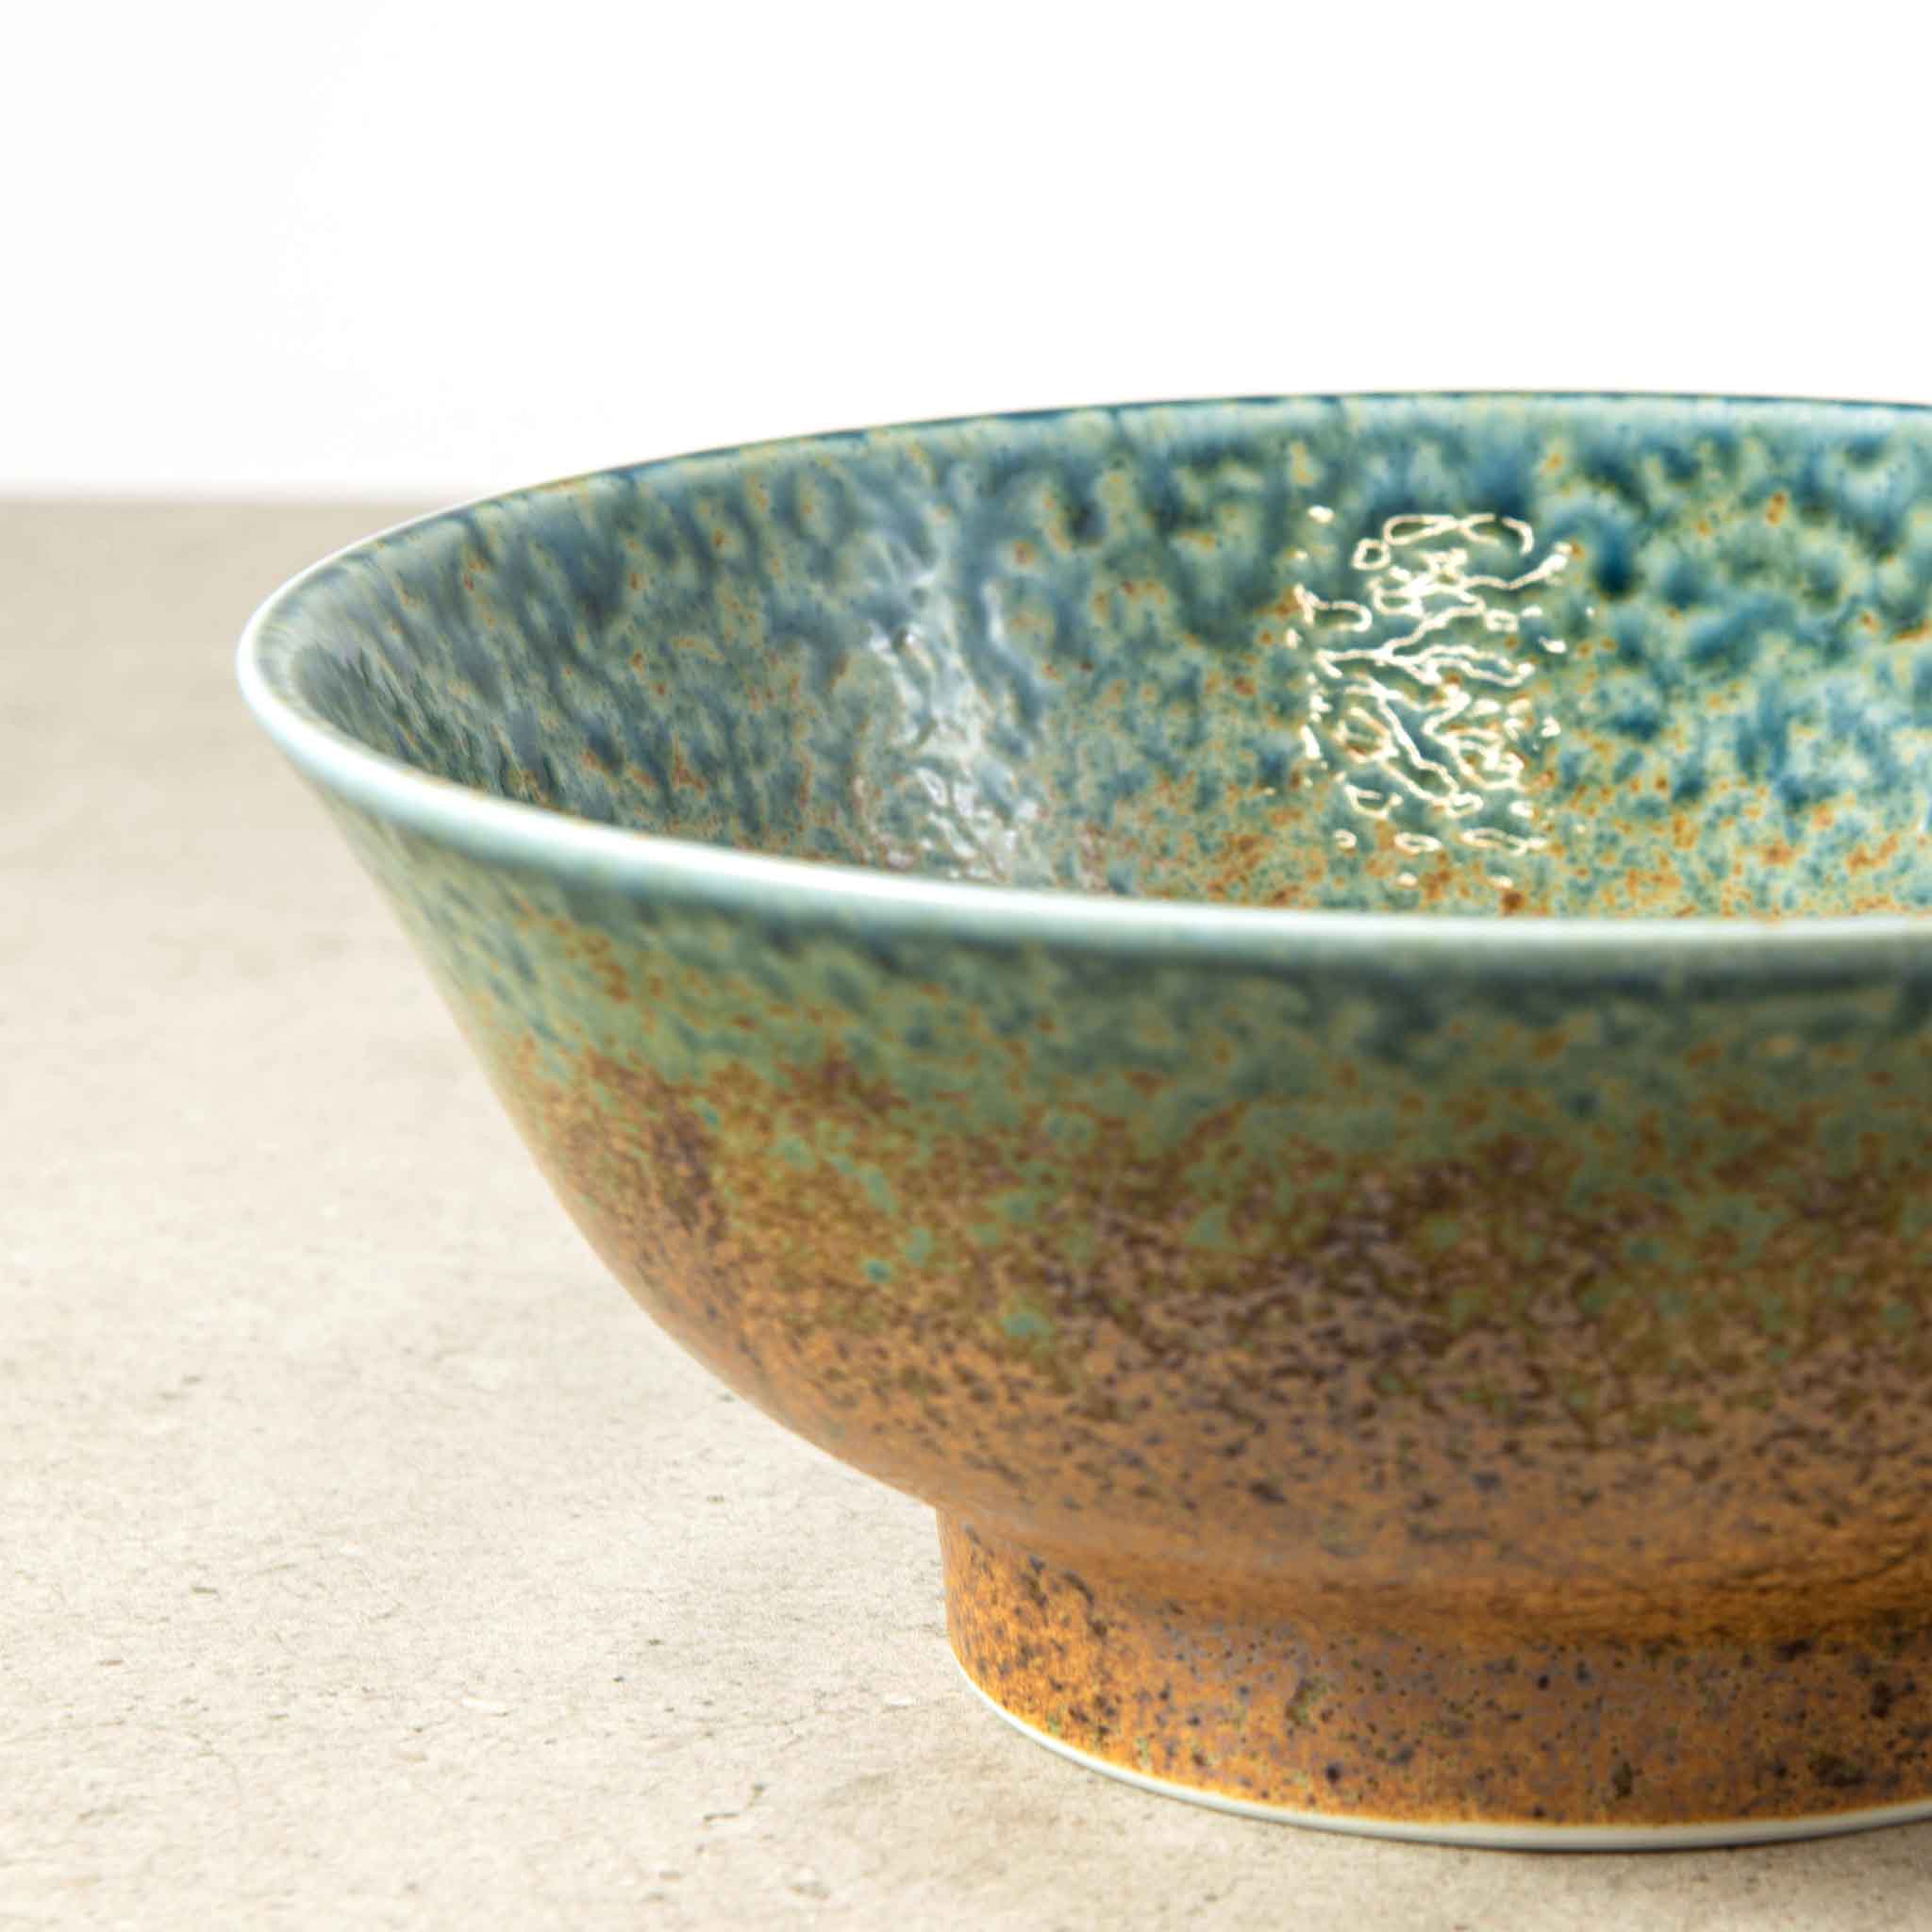 Japanese Ramen Bowl Set  Buy online at Sous Chef UK